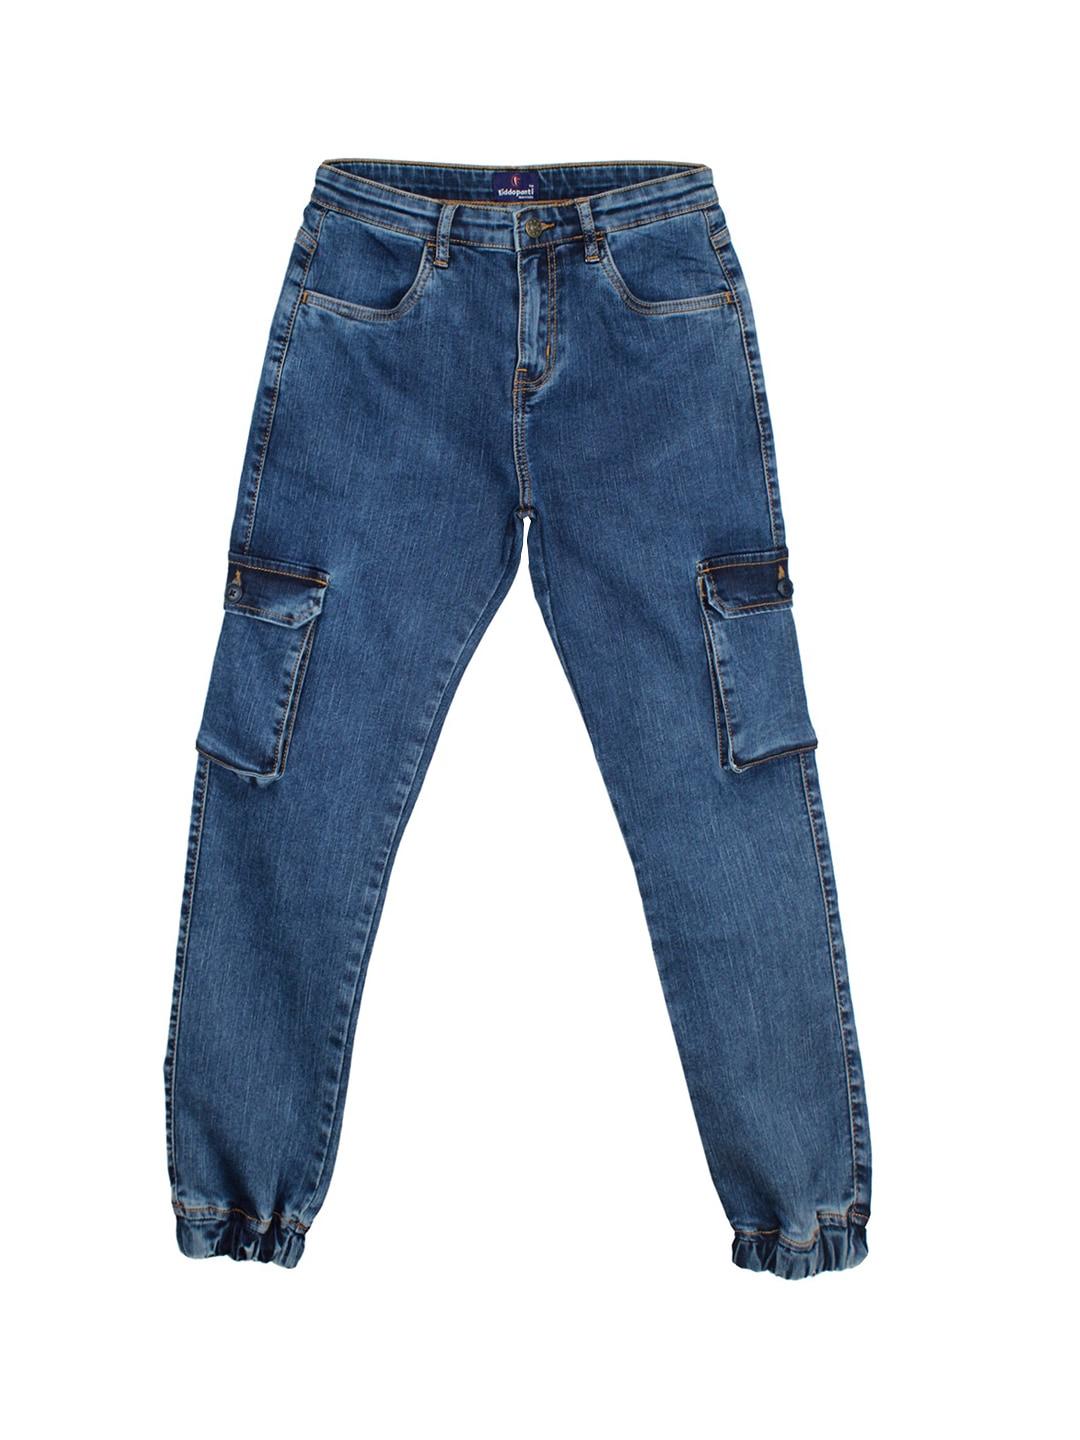 kiddopanti boys jean clean look stretchable jeans